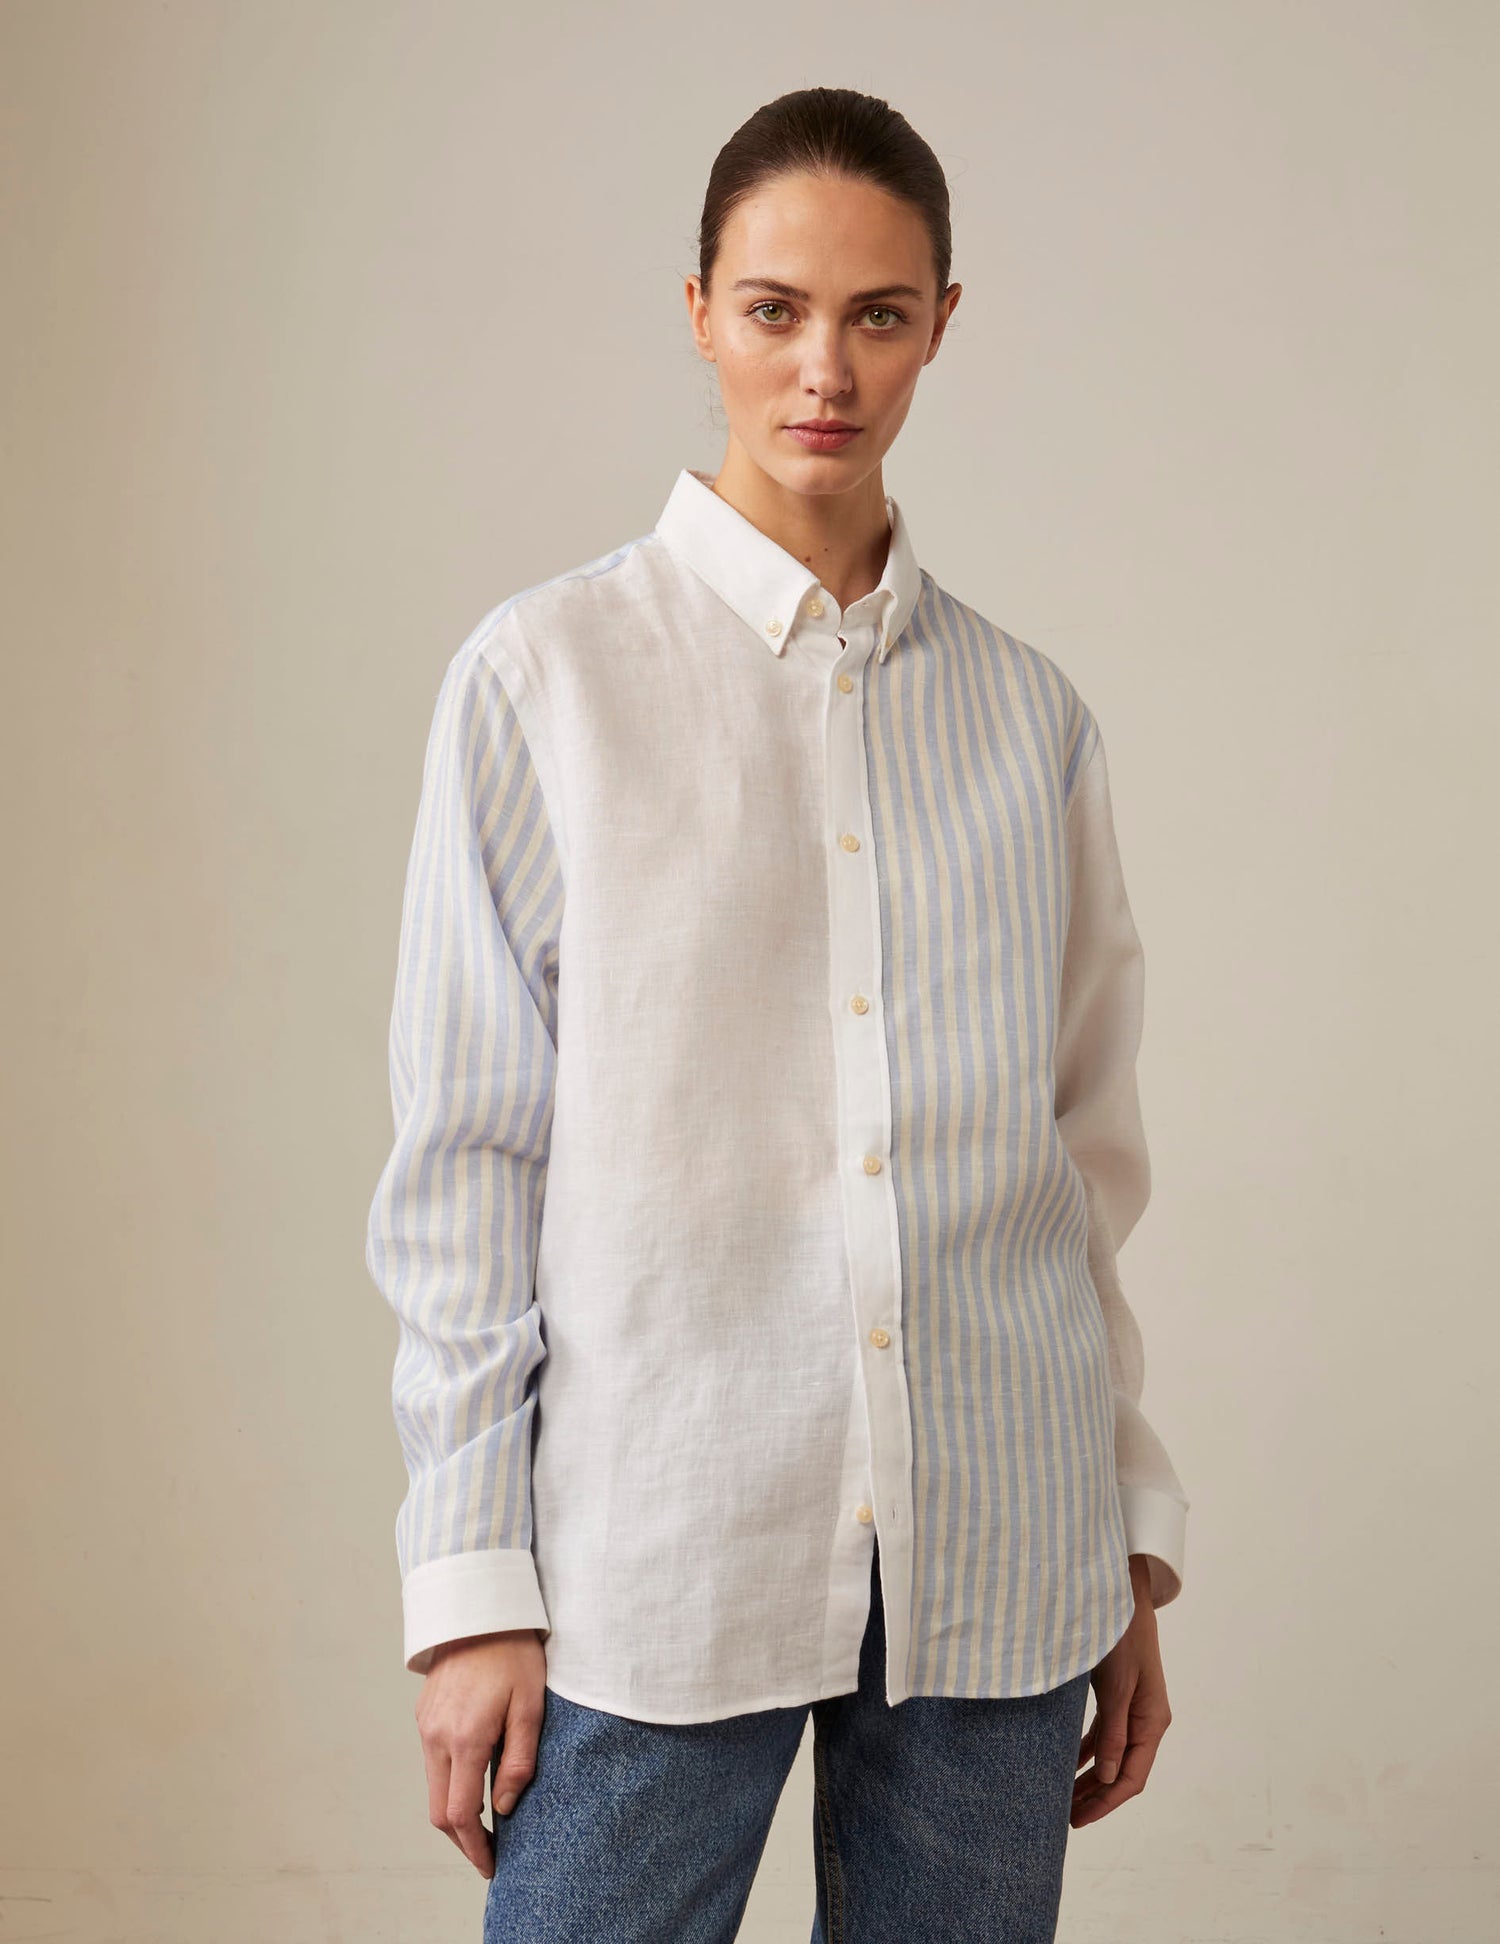 Harry blue and white striped linen fun shirt - Linen - American Collar#5